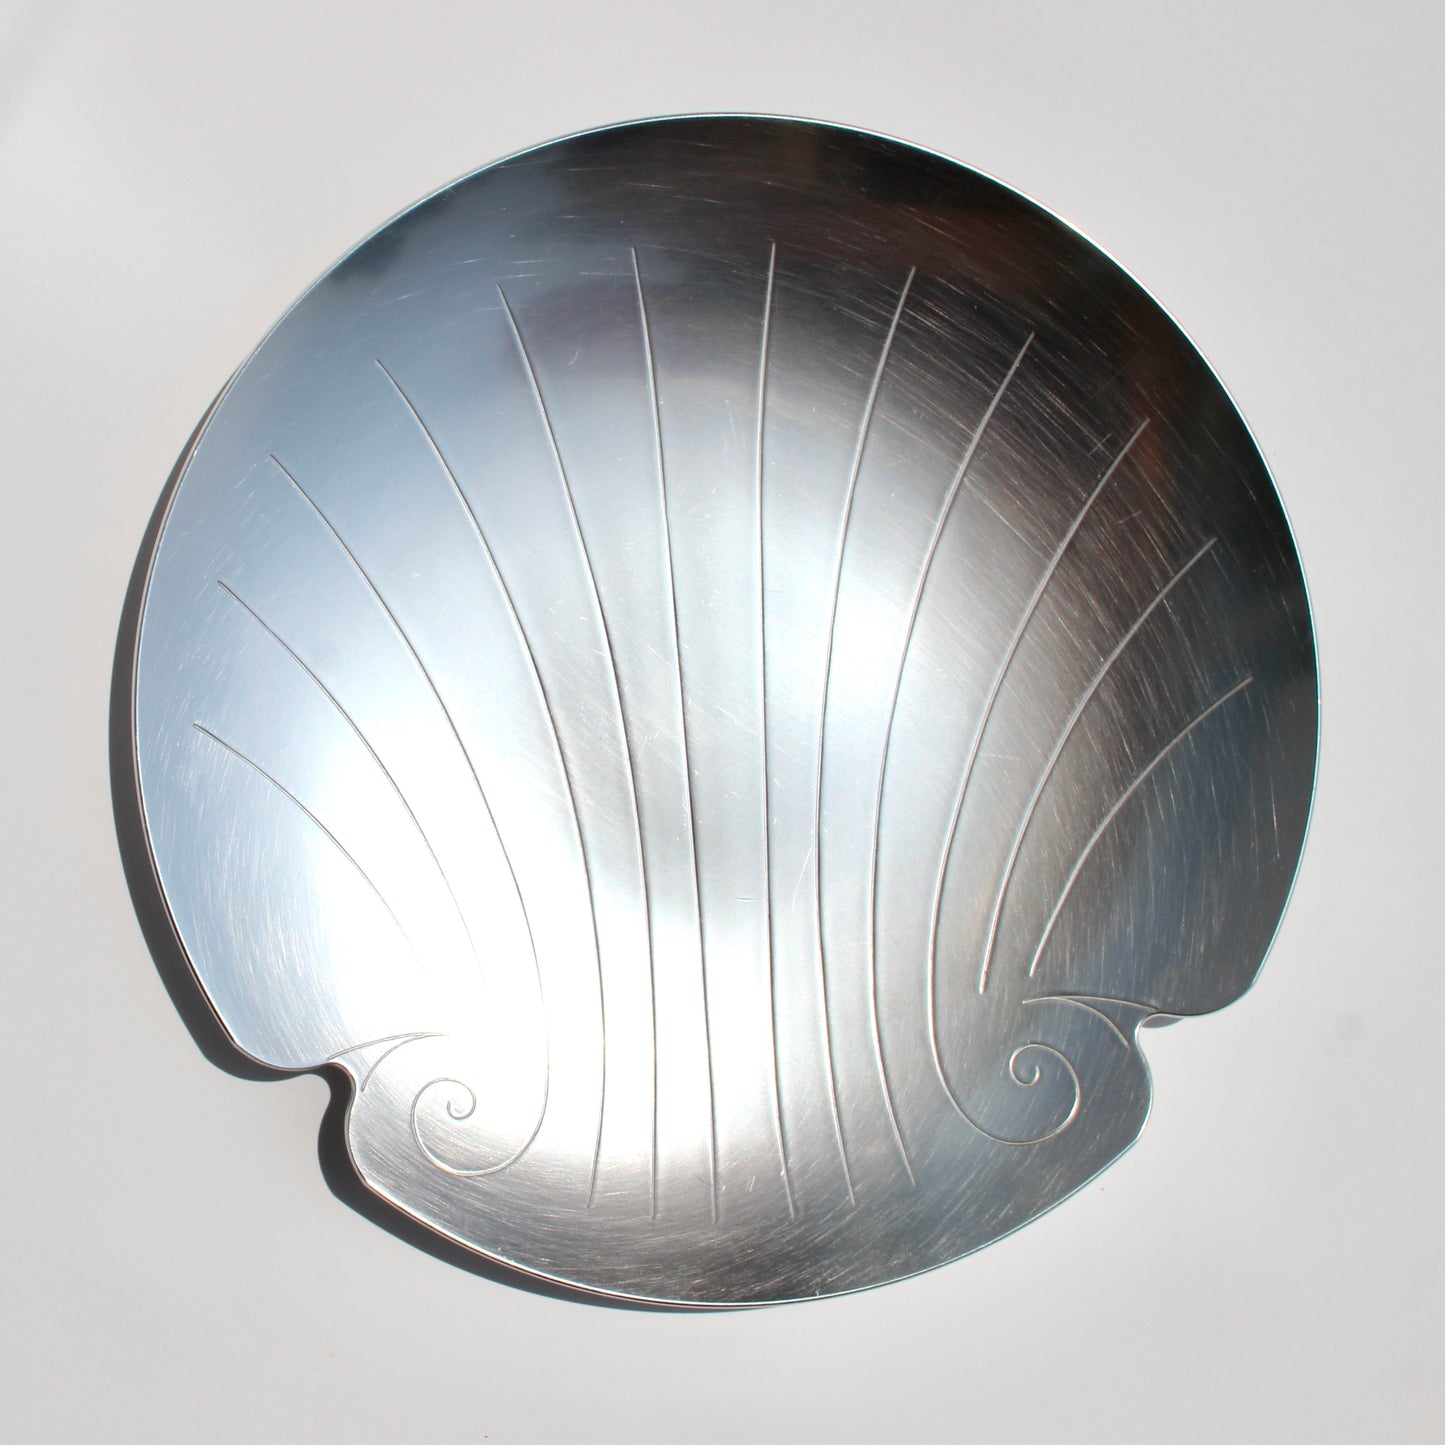 deco aluminum shell plate